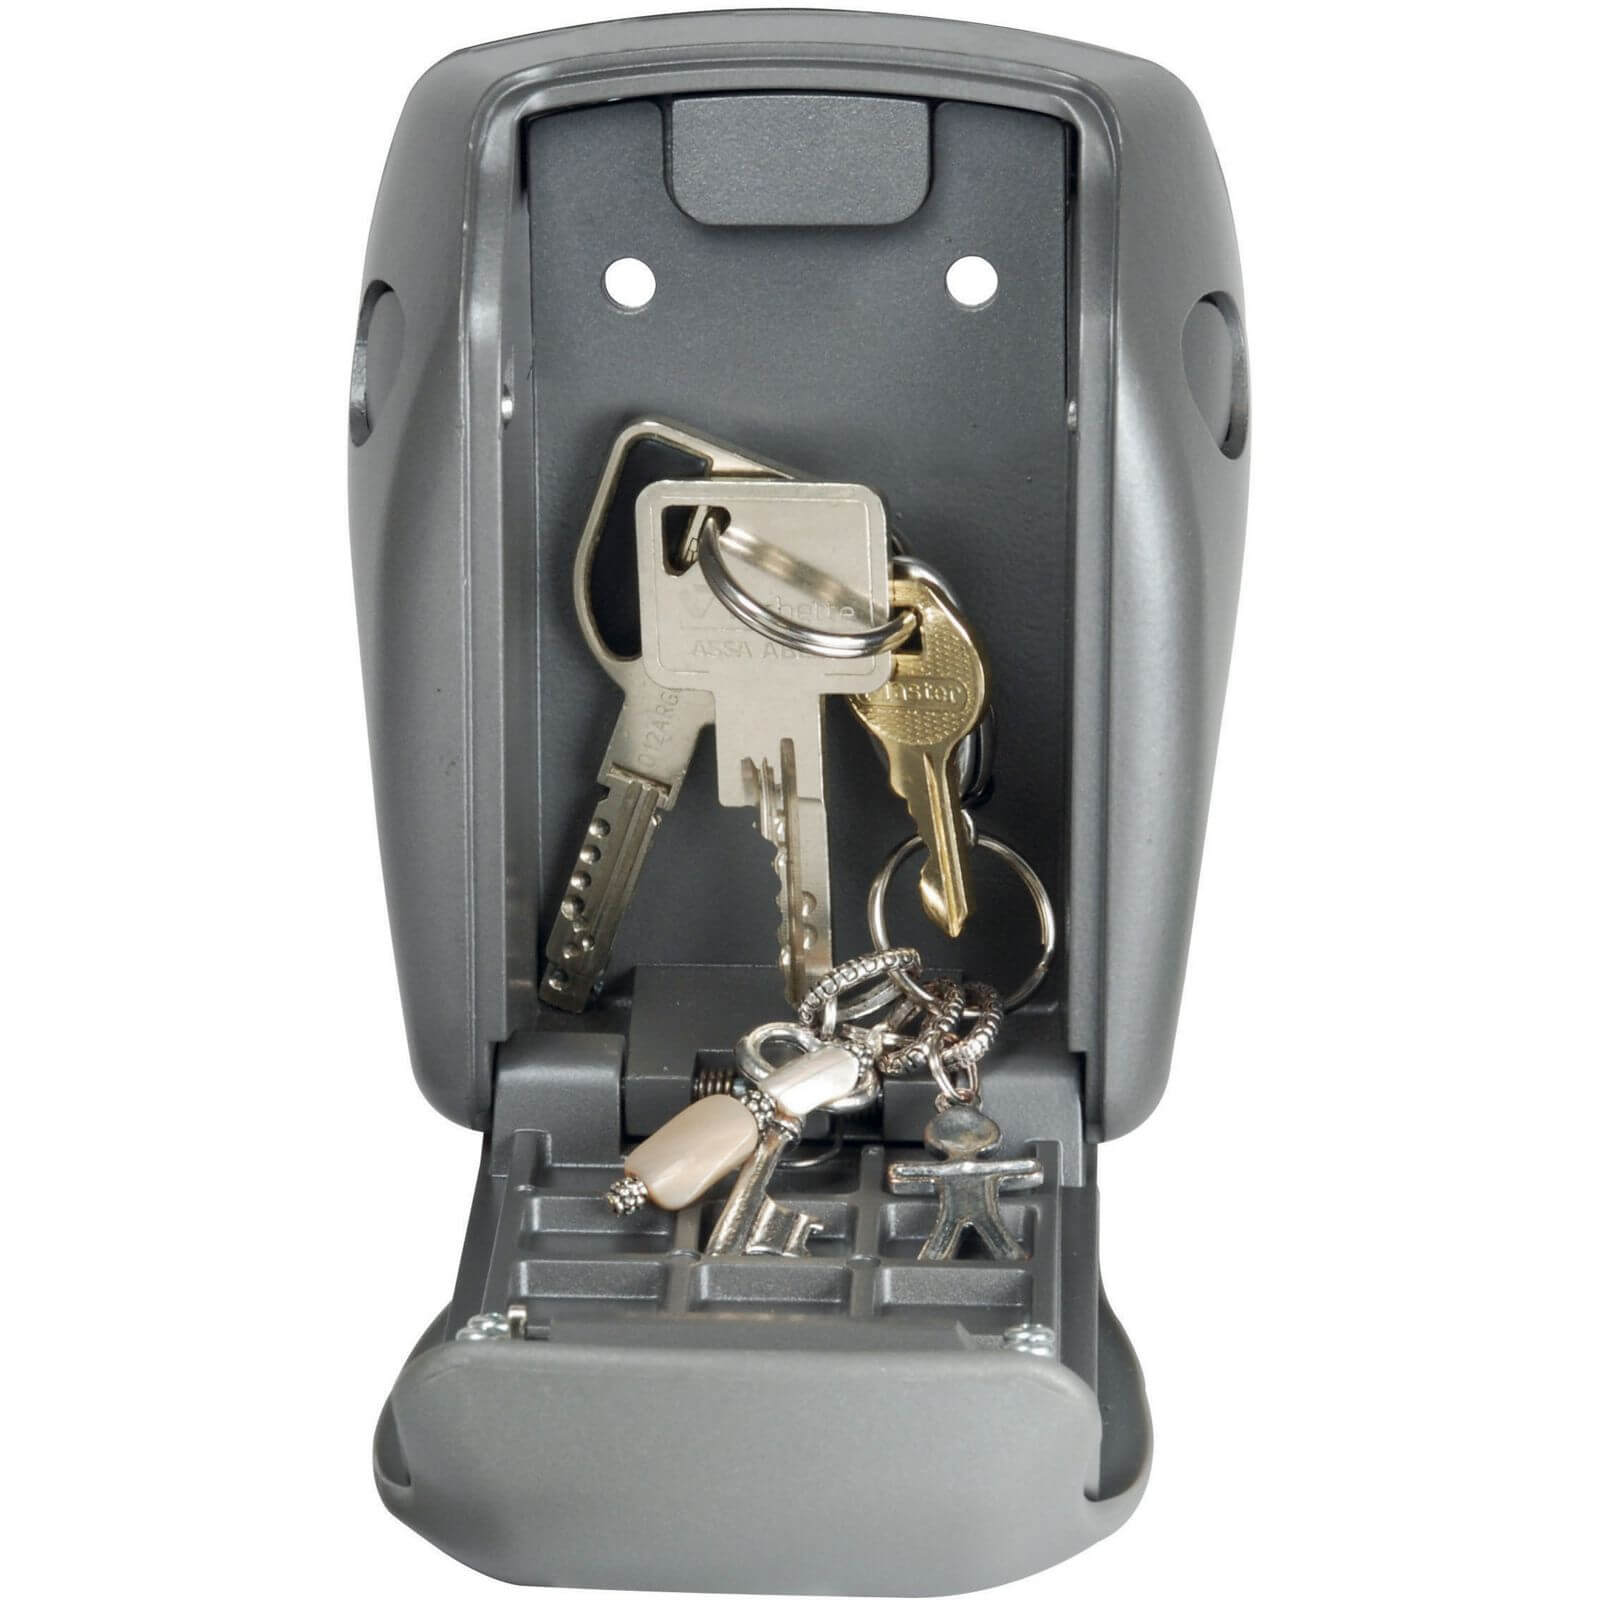 Master Lock Reinforced 4 Digit Combination Keysafe